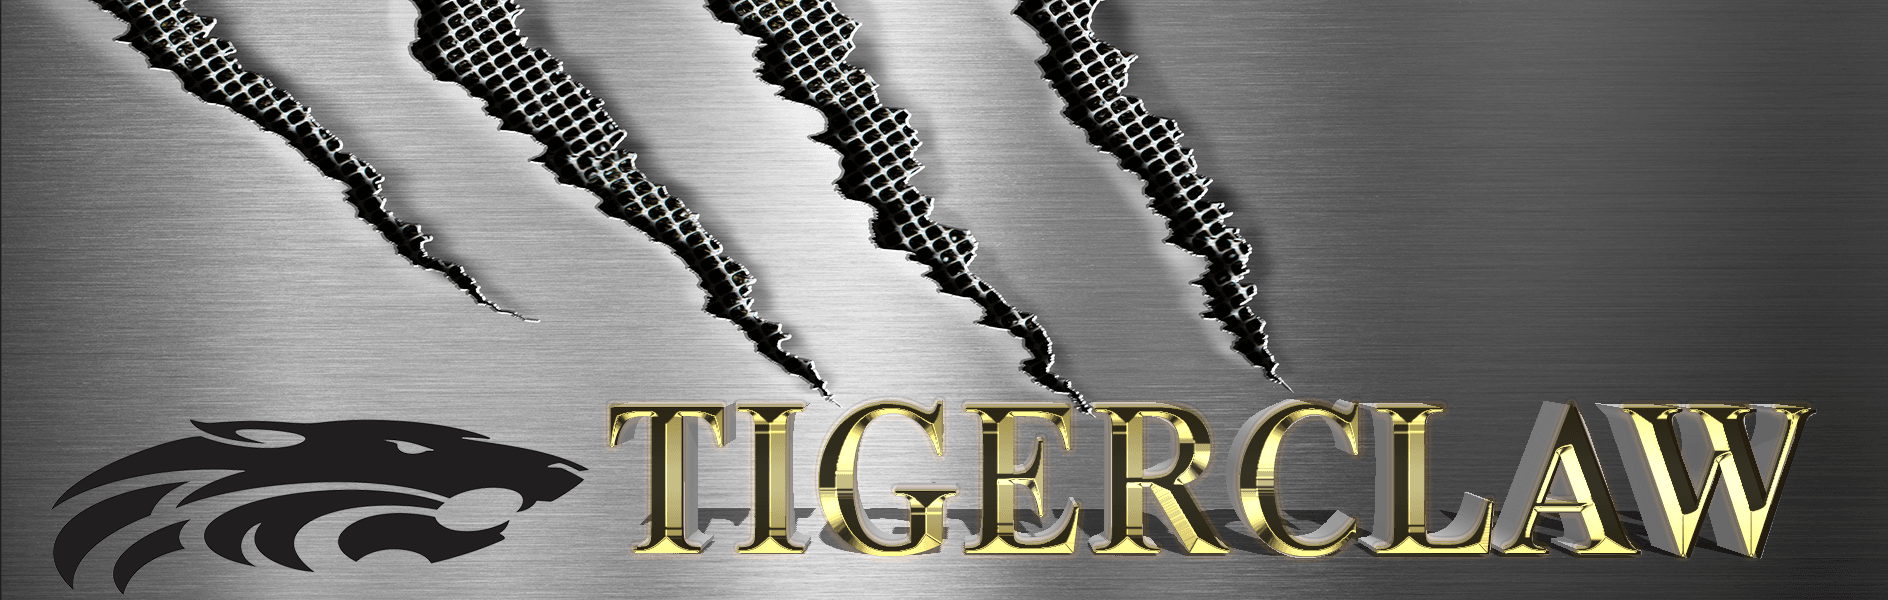 TIGER-CLAW バナー